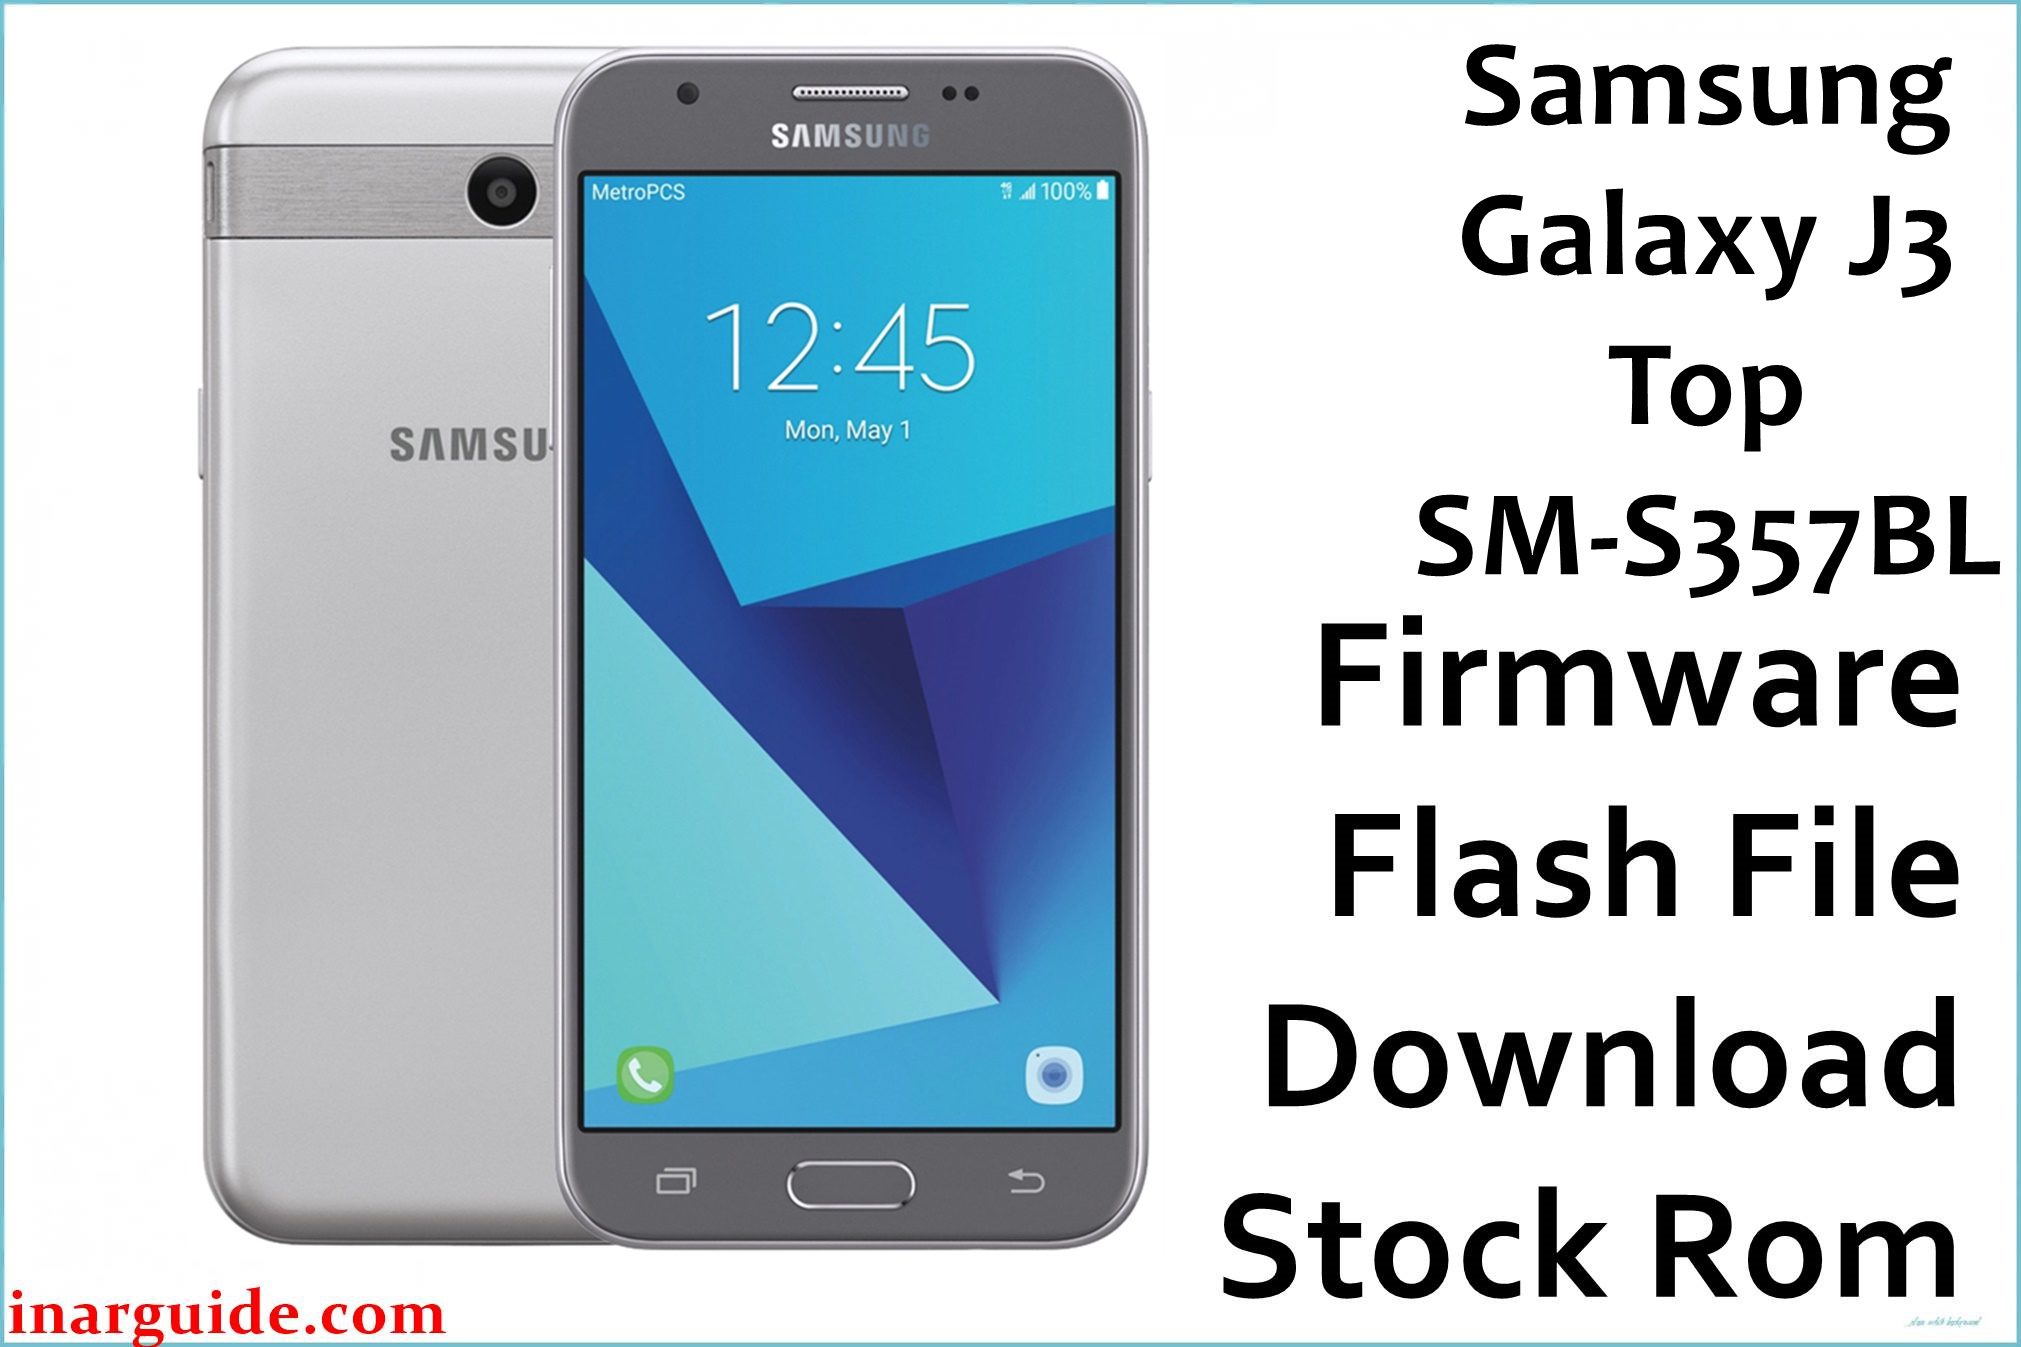 Samsung Galaxy J3 Top SM S357BL